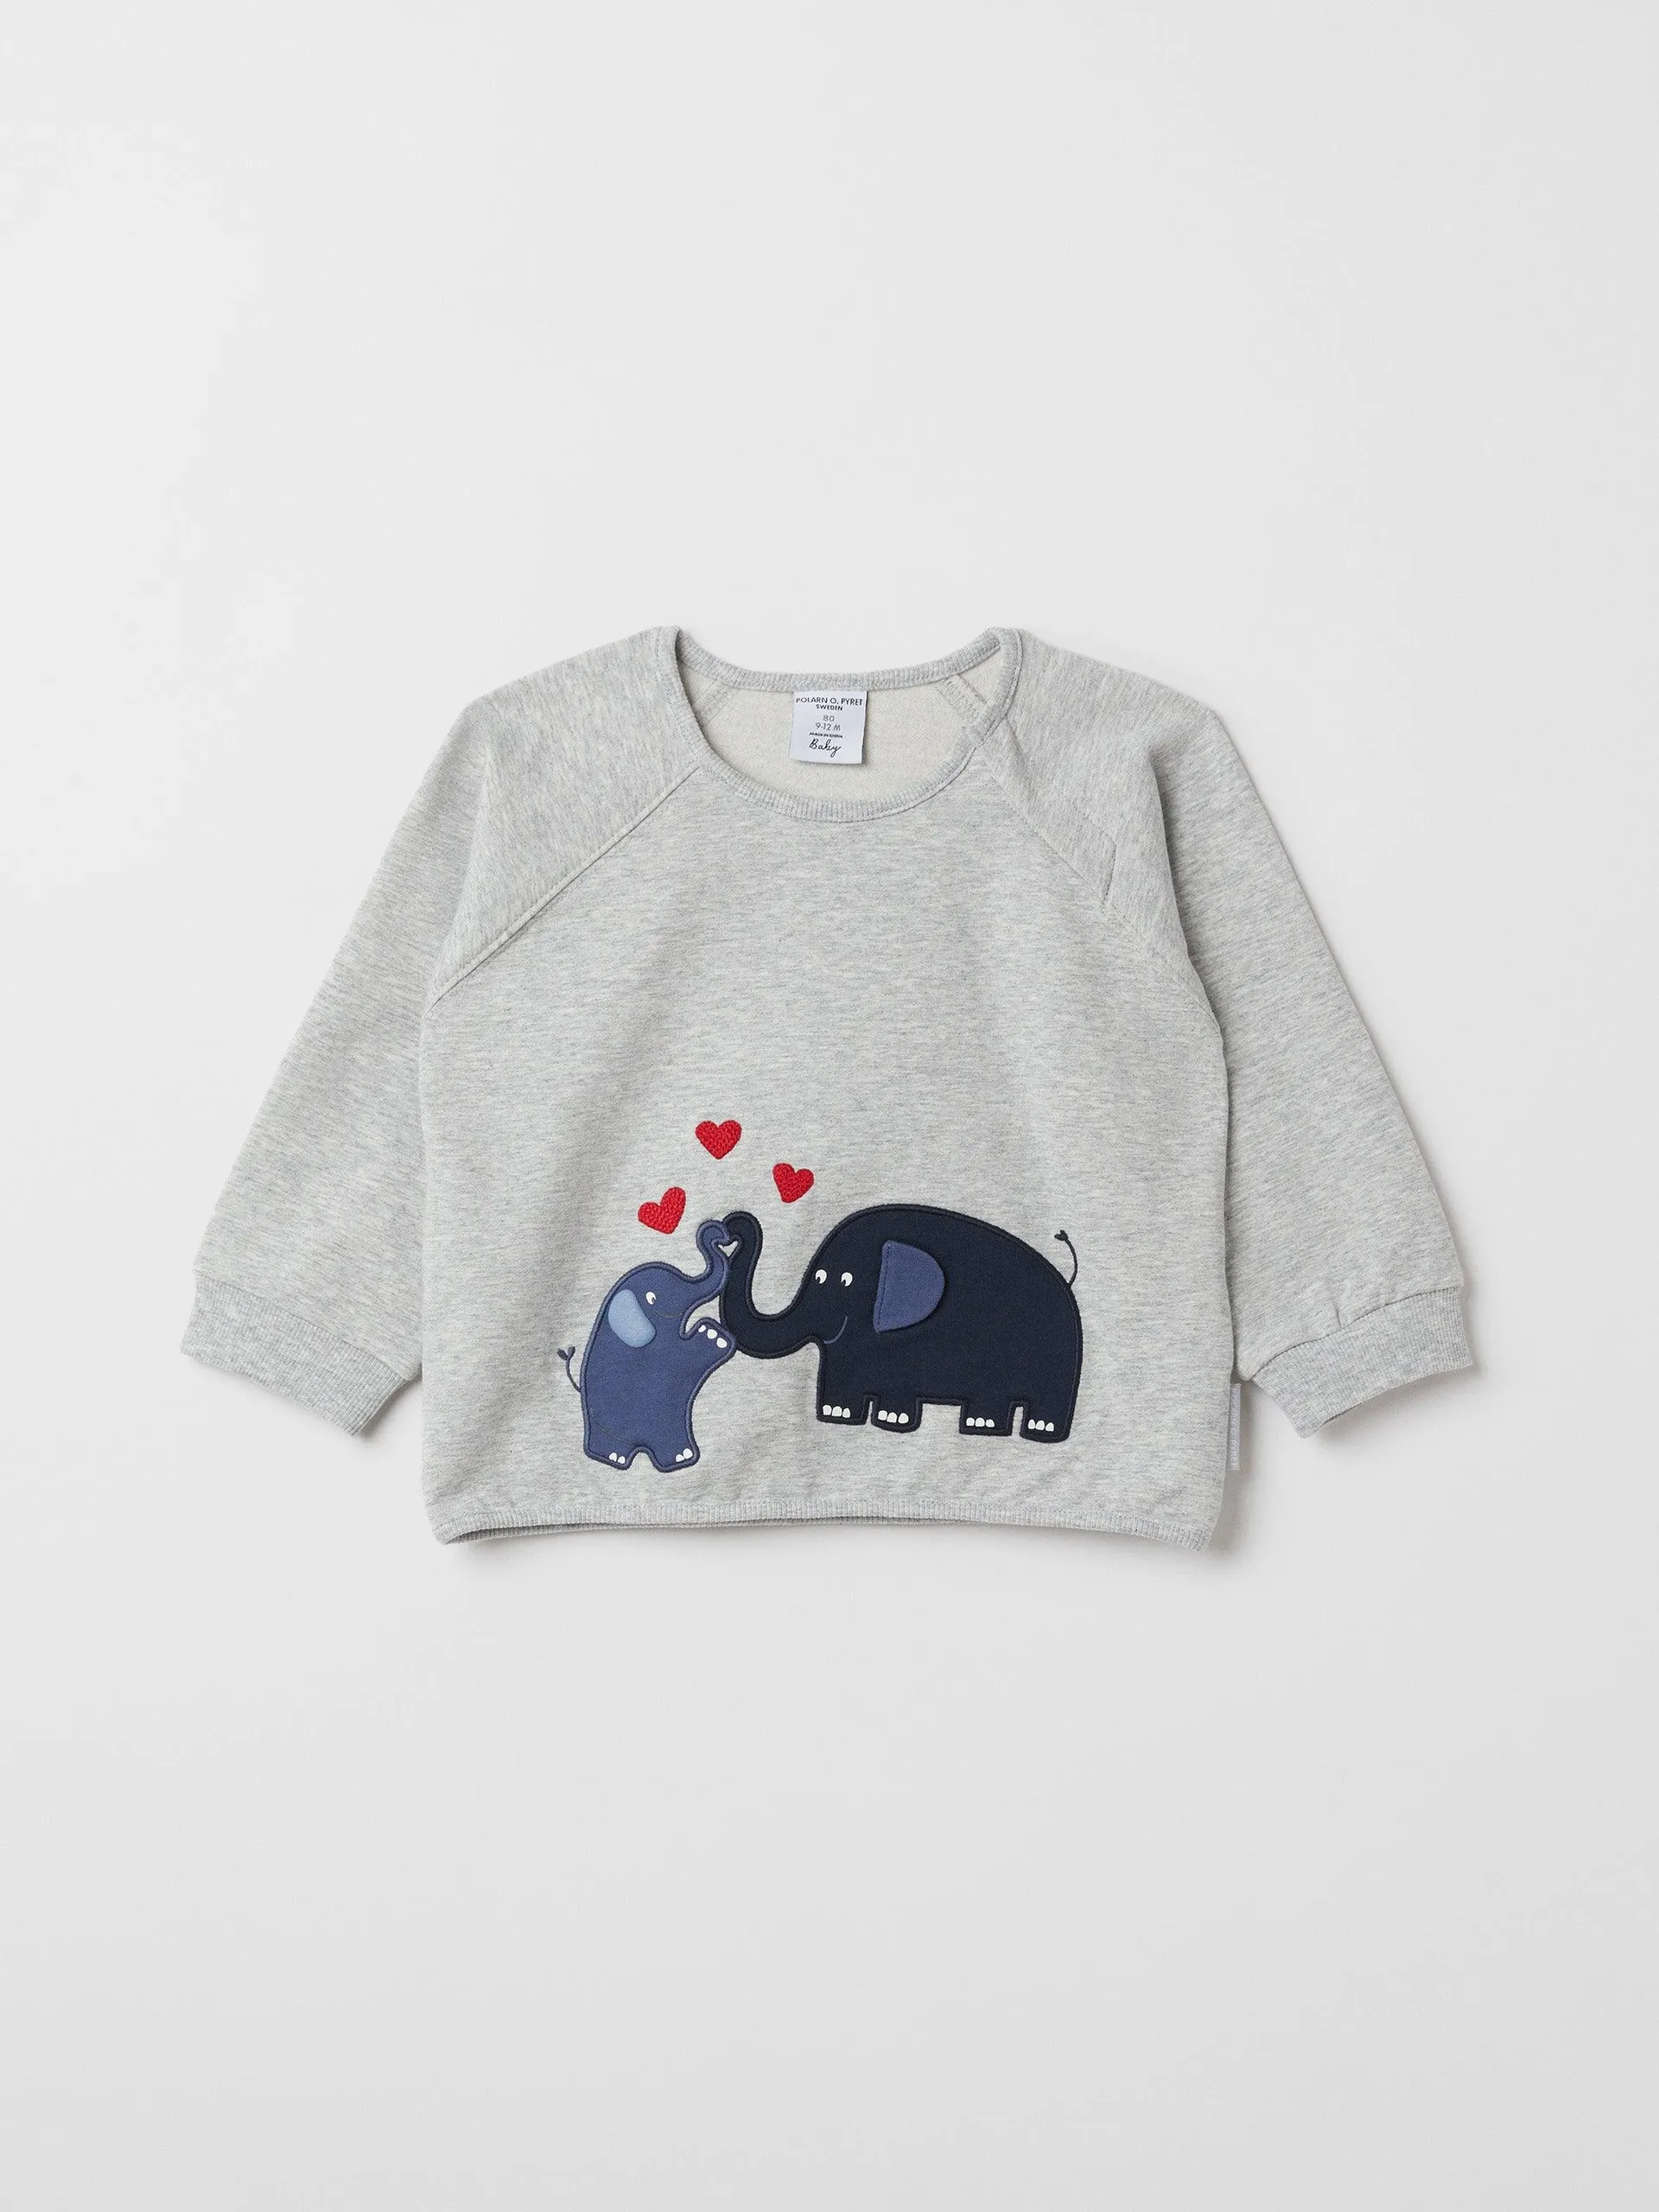 Elephant & Heart Baby Top